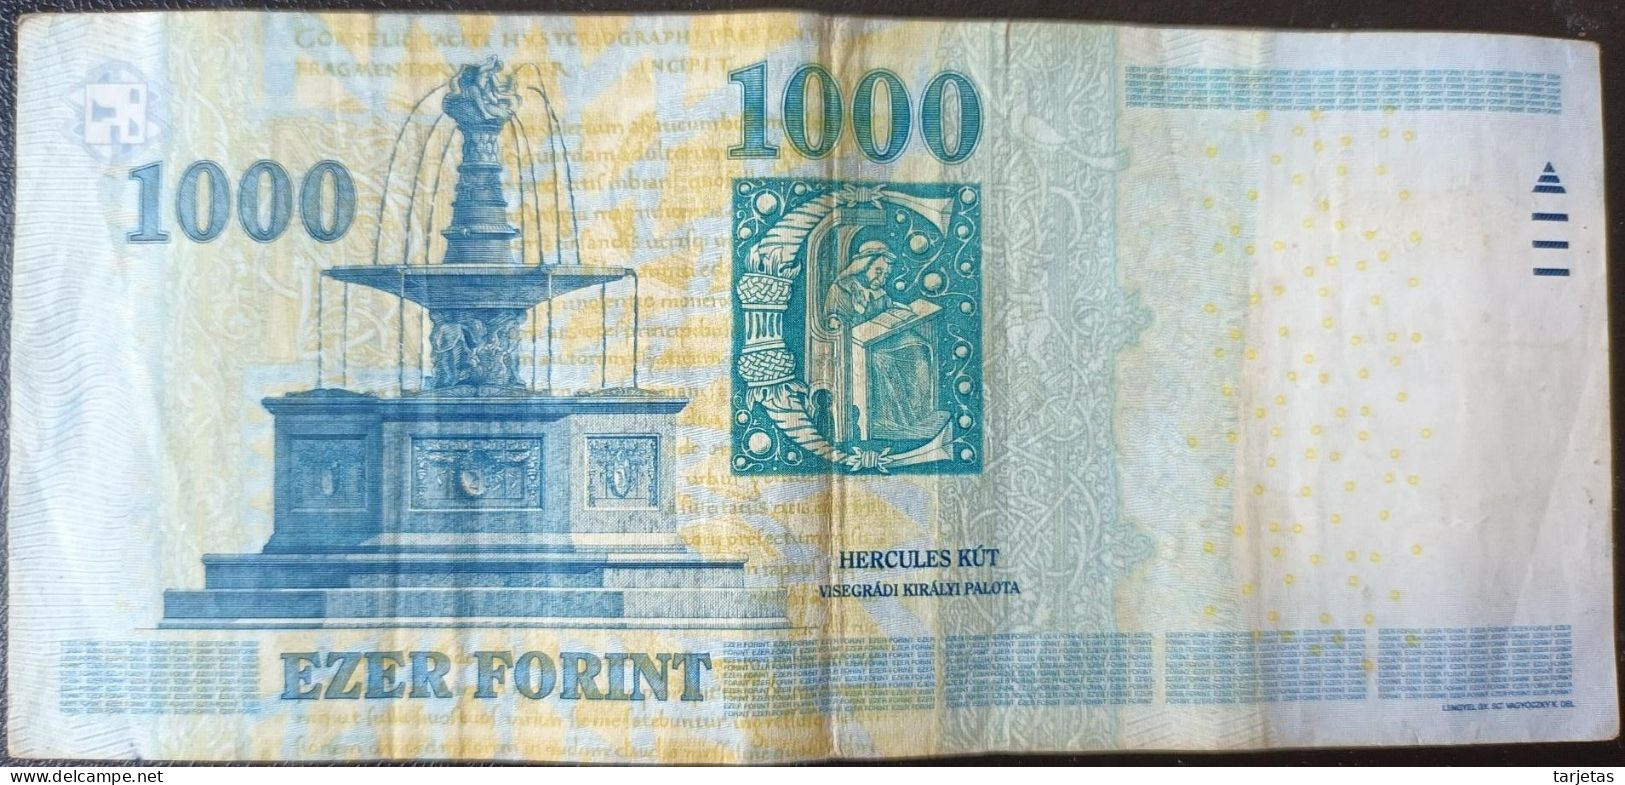 BILLETE DE HUNGRIA DE 1000 FORINT DEL AÑO 2012 (BANKNOTE) - Hungary